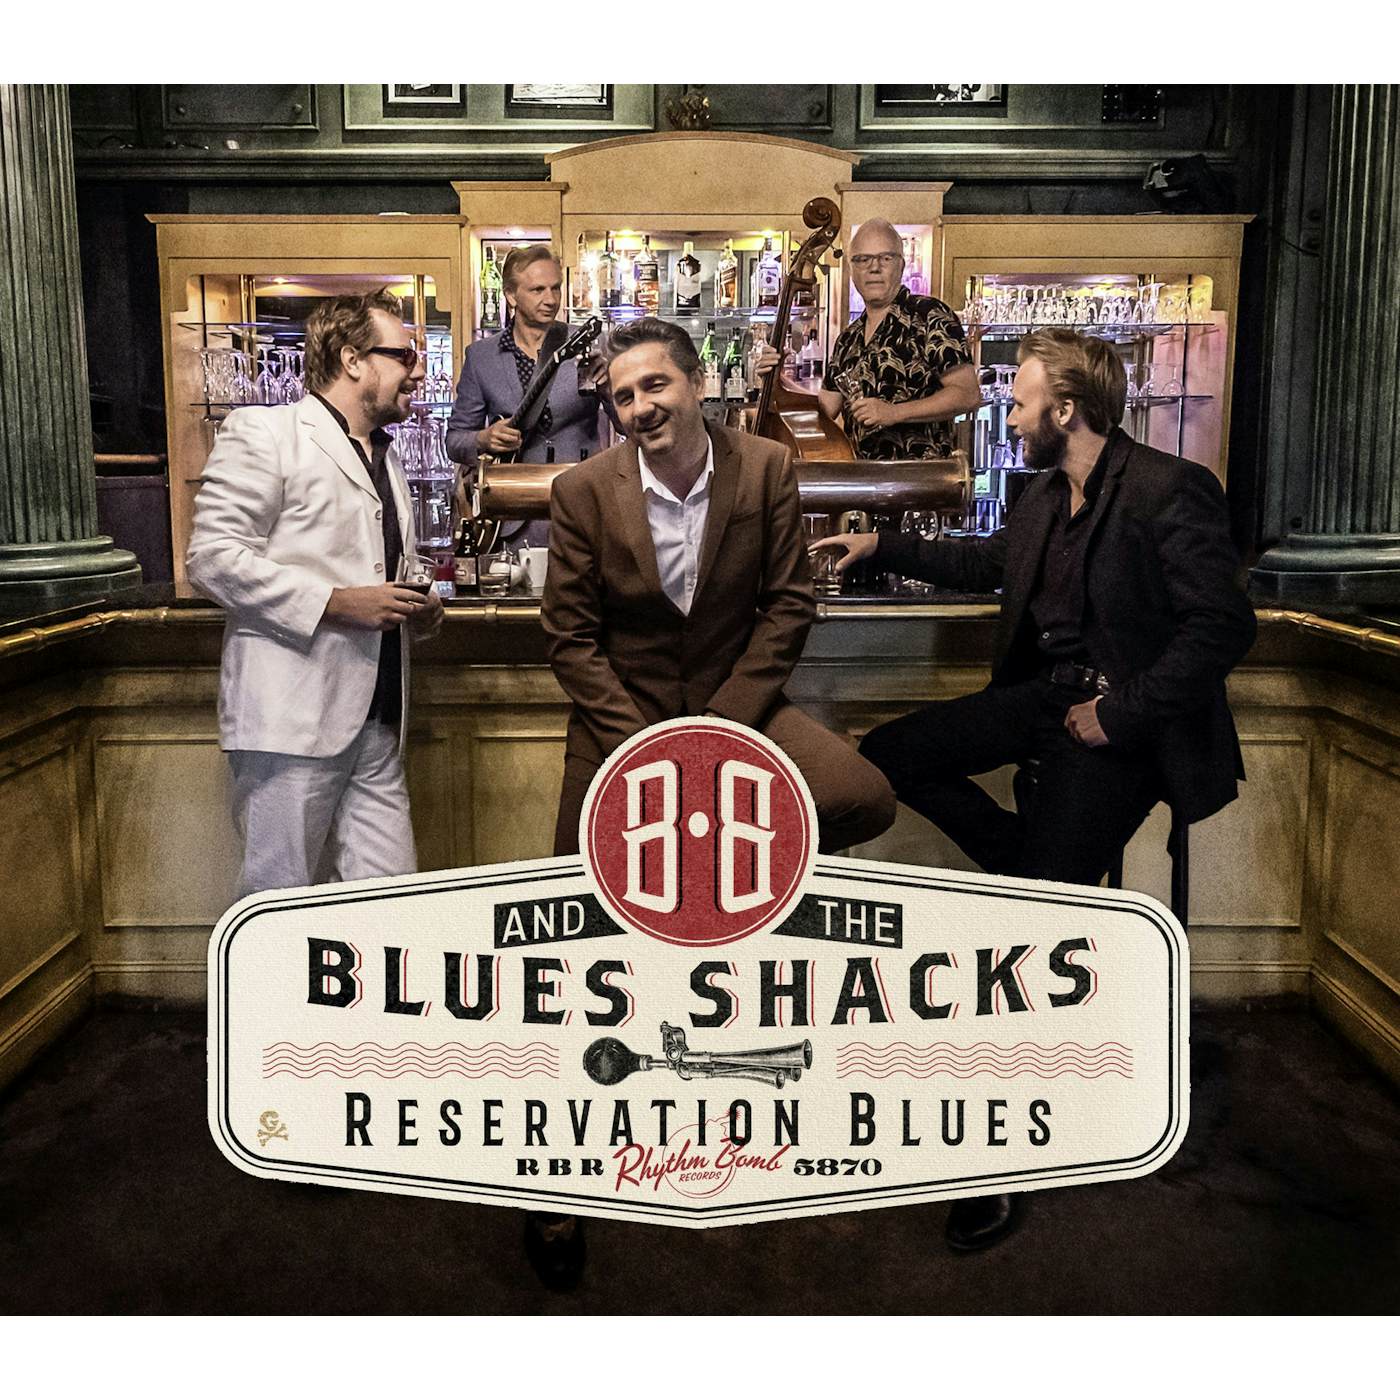 B.B. & The Blues Shacks Reservation Blues Vinyl Record